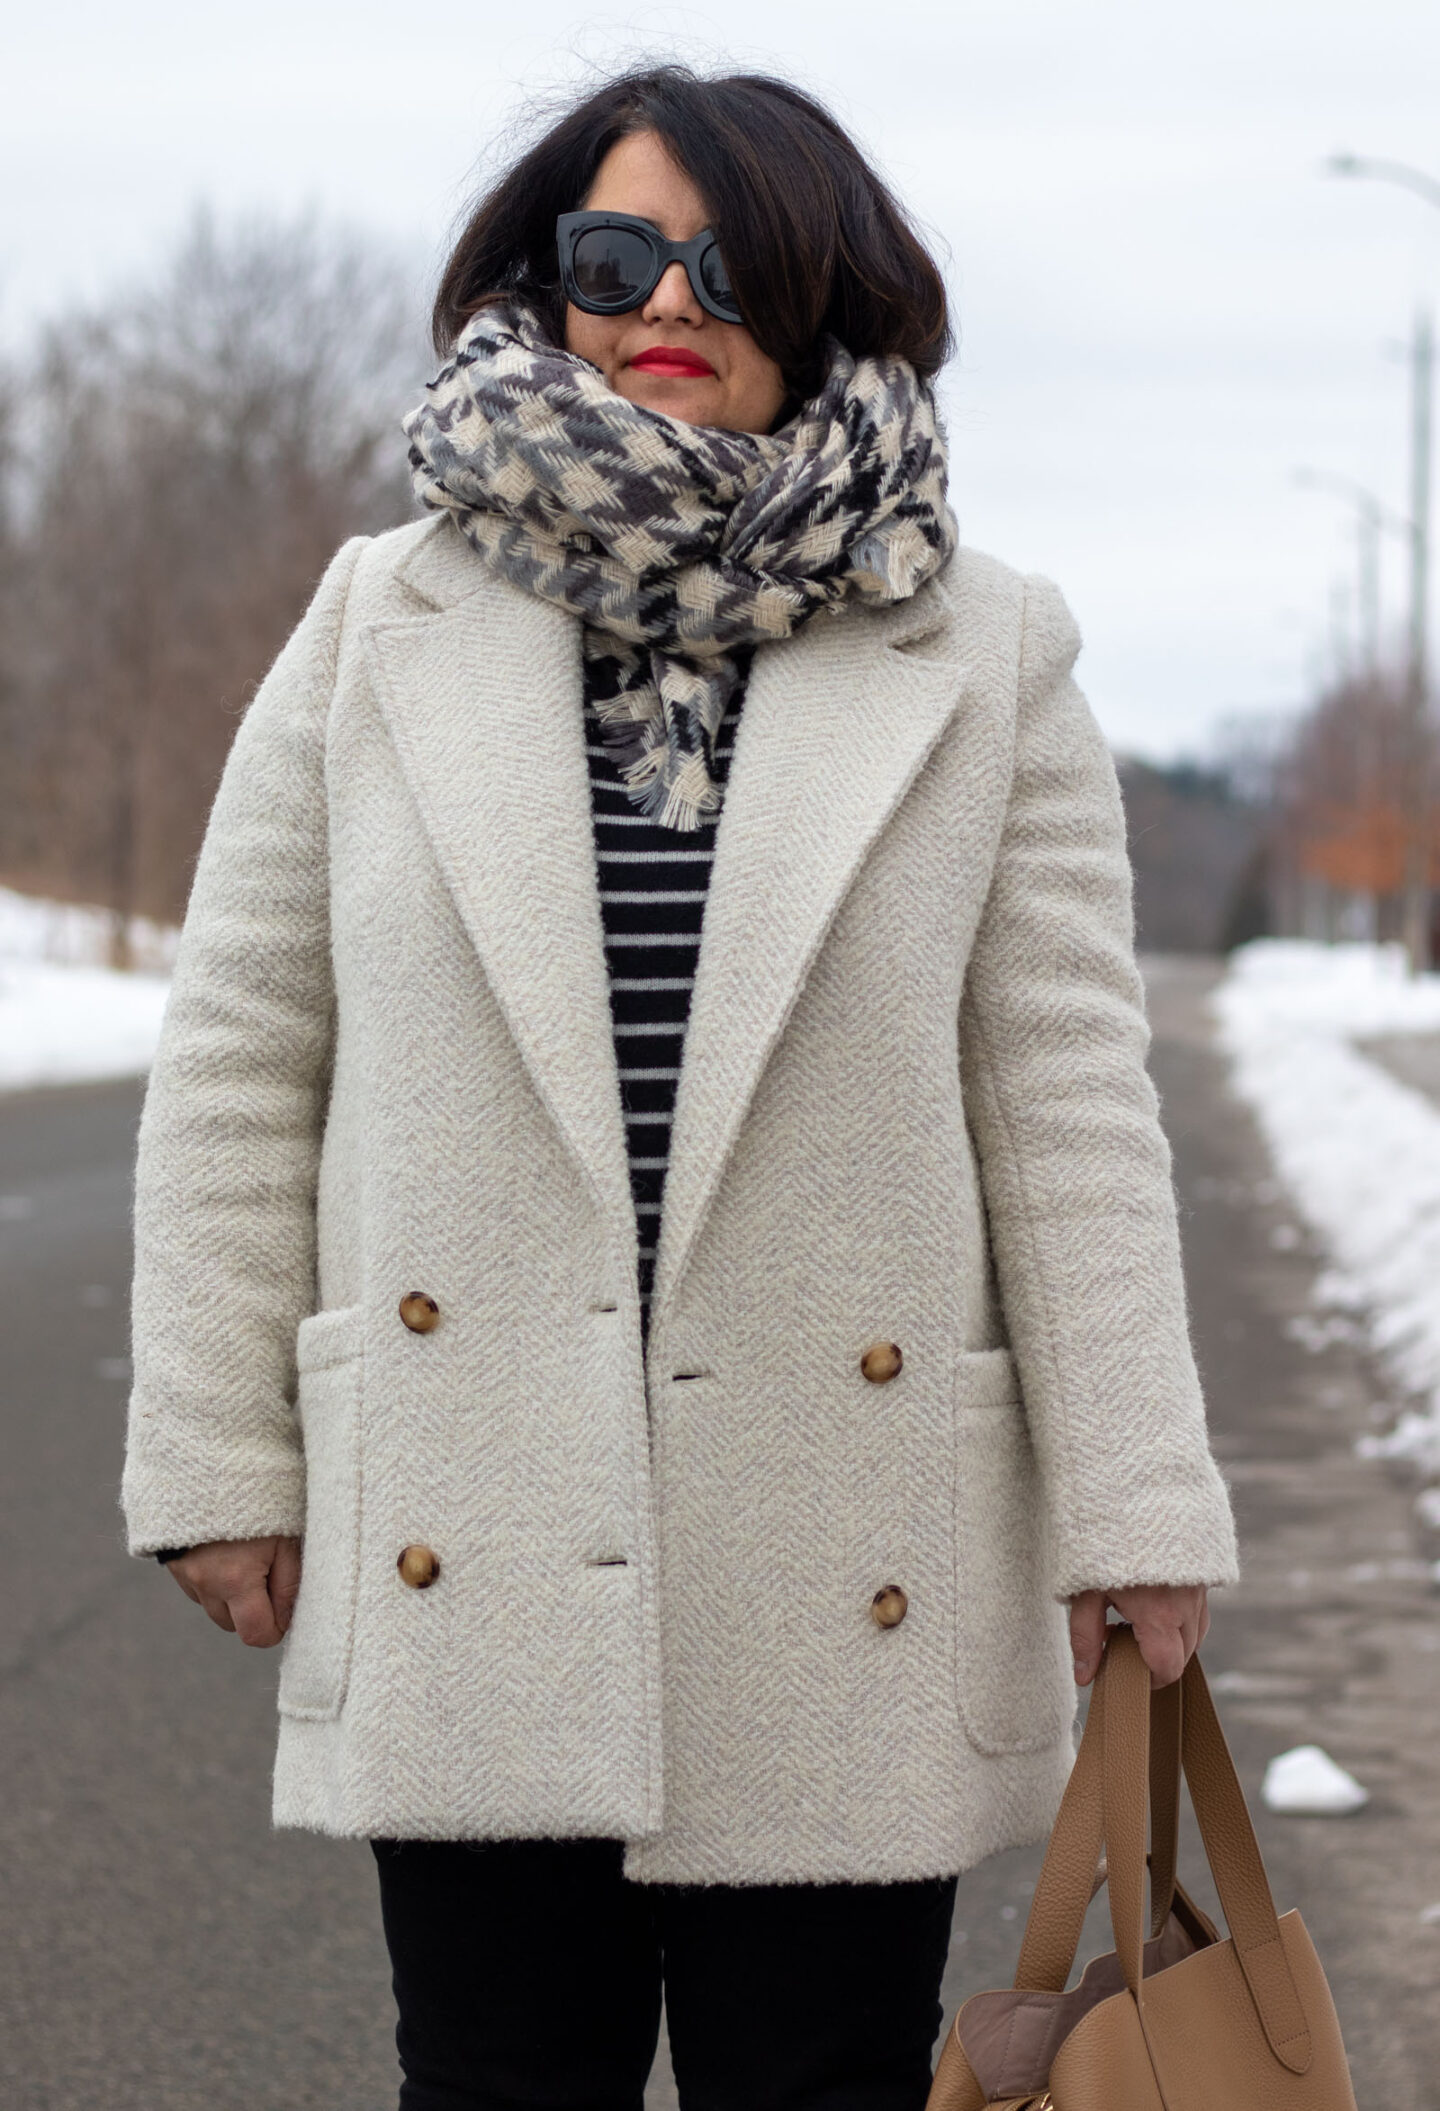 sezane coat, hm scarf, neutral outfit